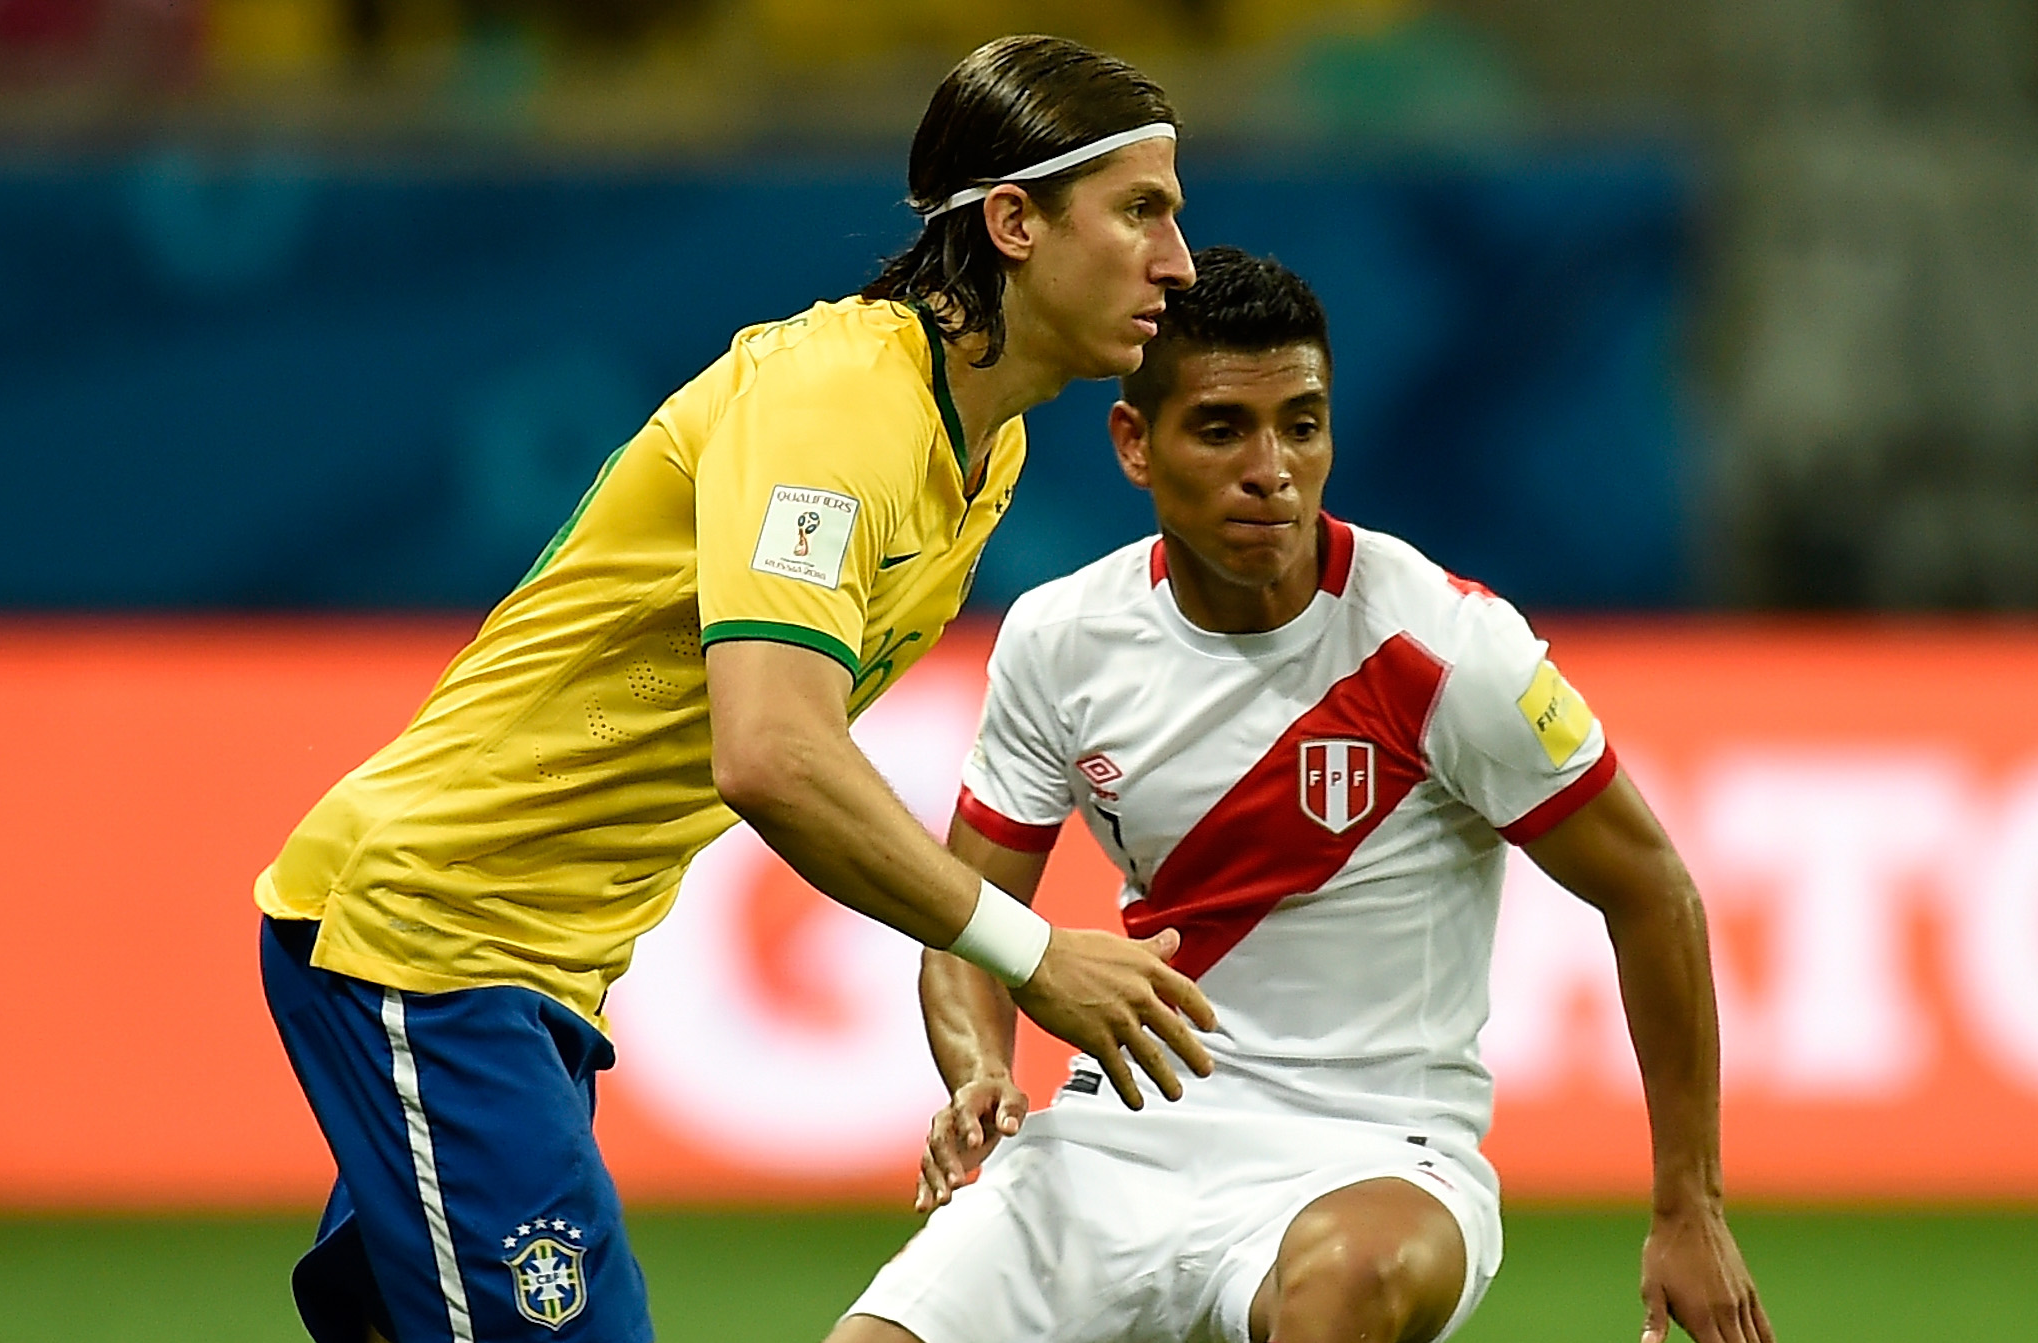 Brazil Peru Group B Photo (Getty Images)